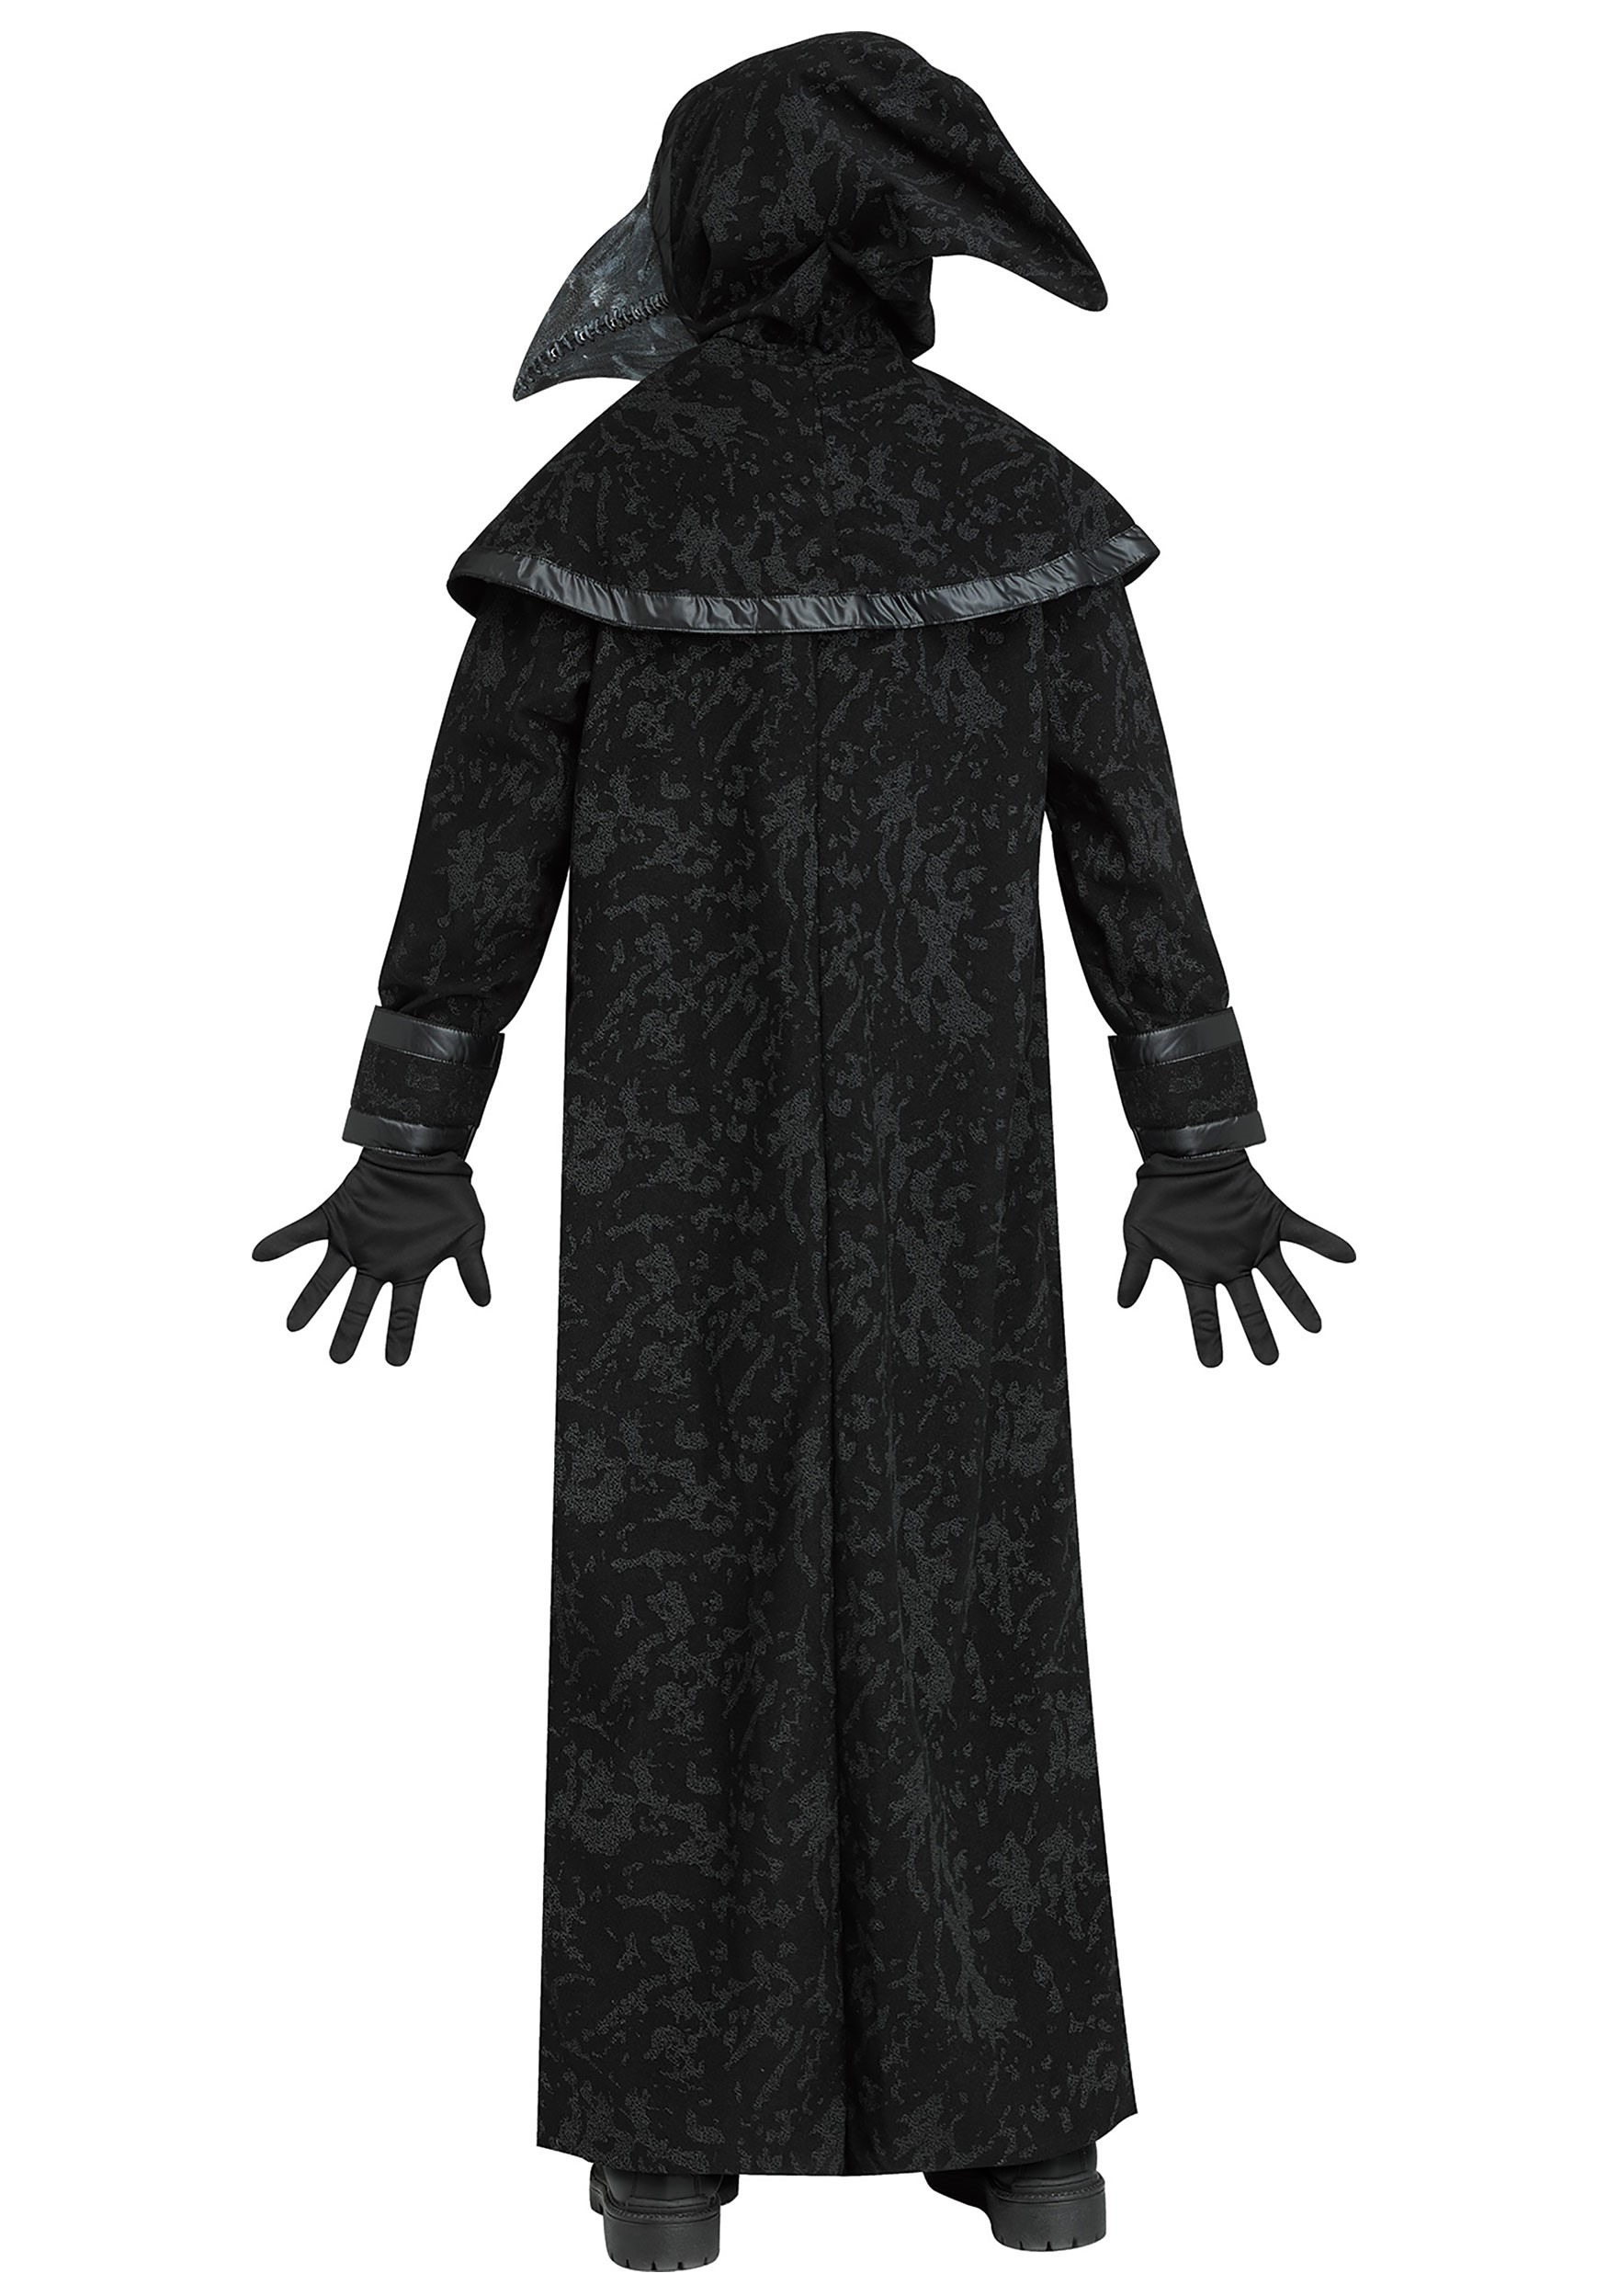 Plague Doctor Kid's Costume